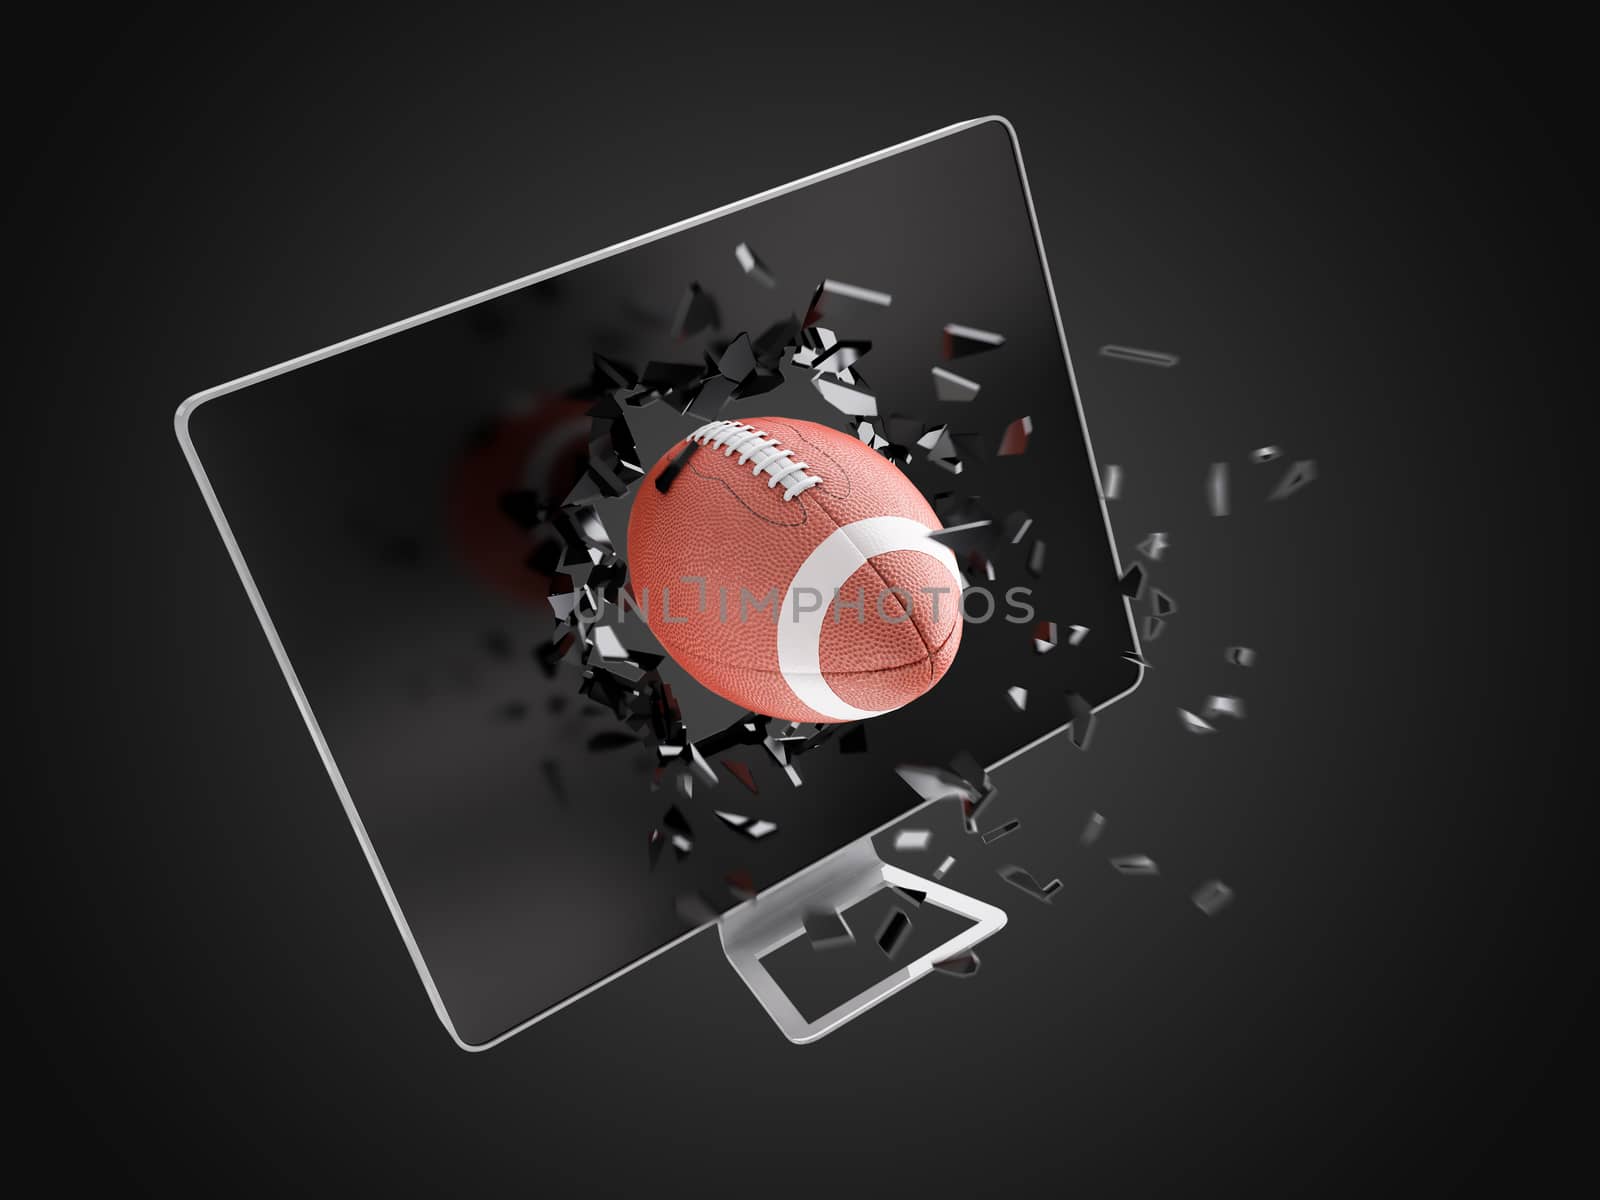 football destroy computer screen, technology background